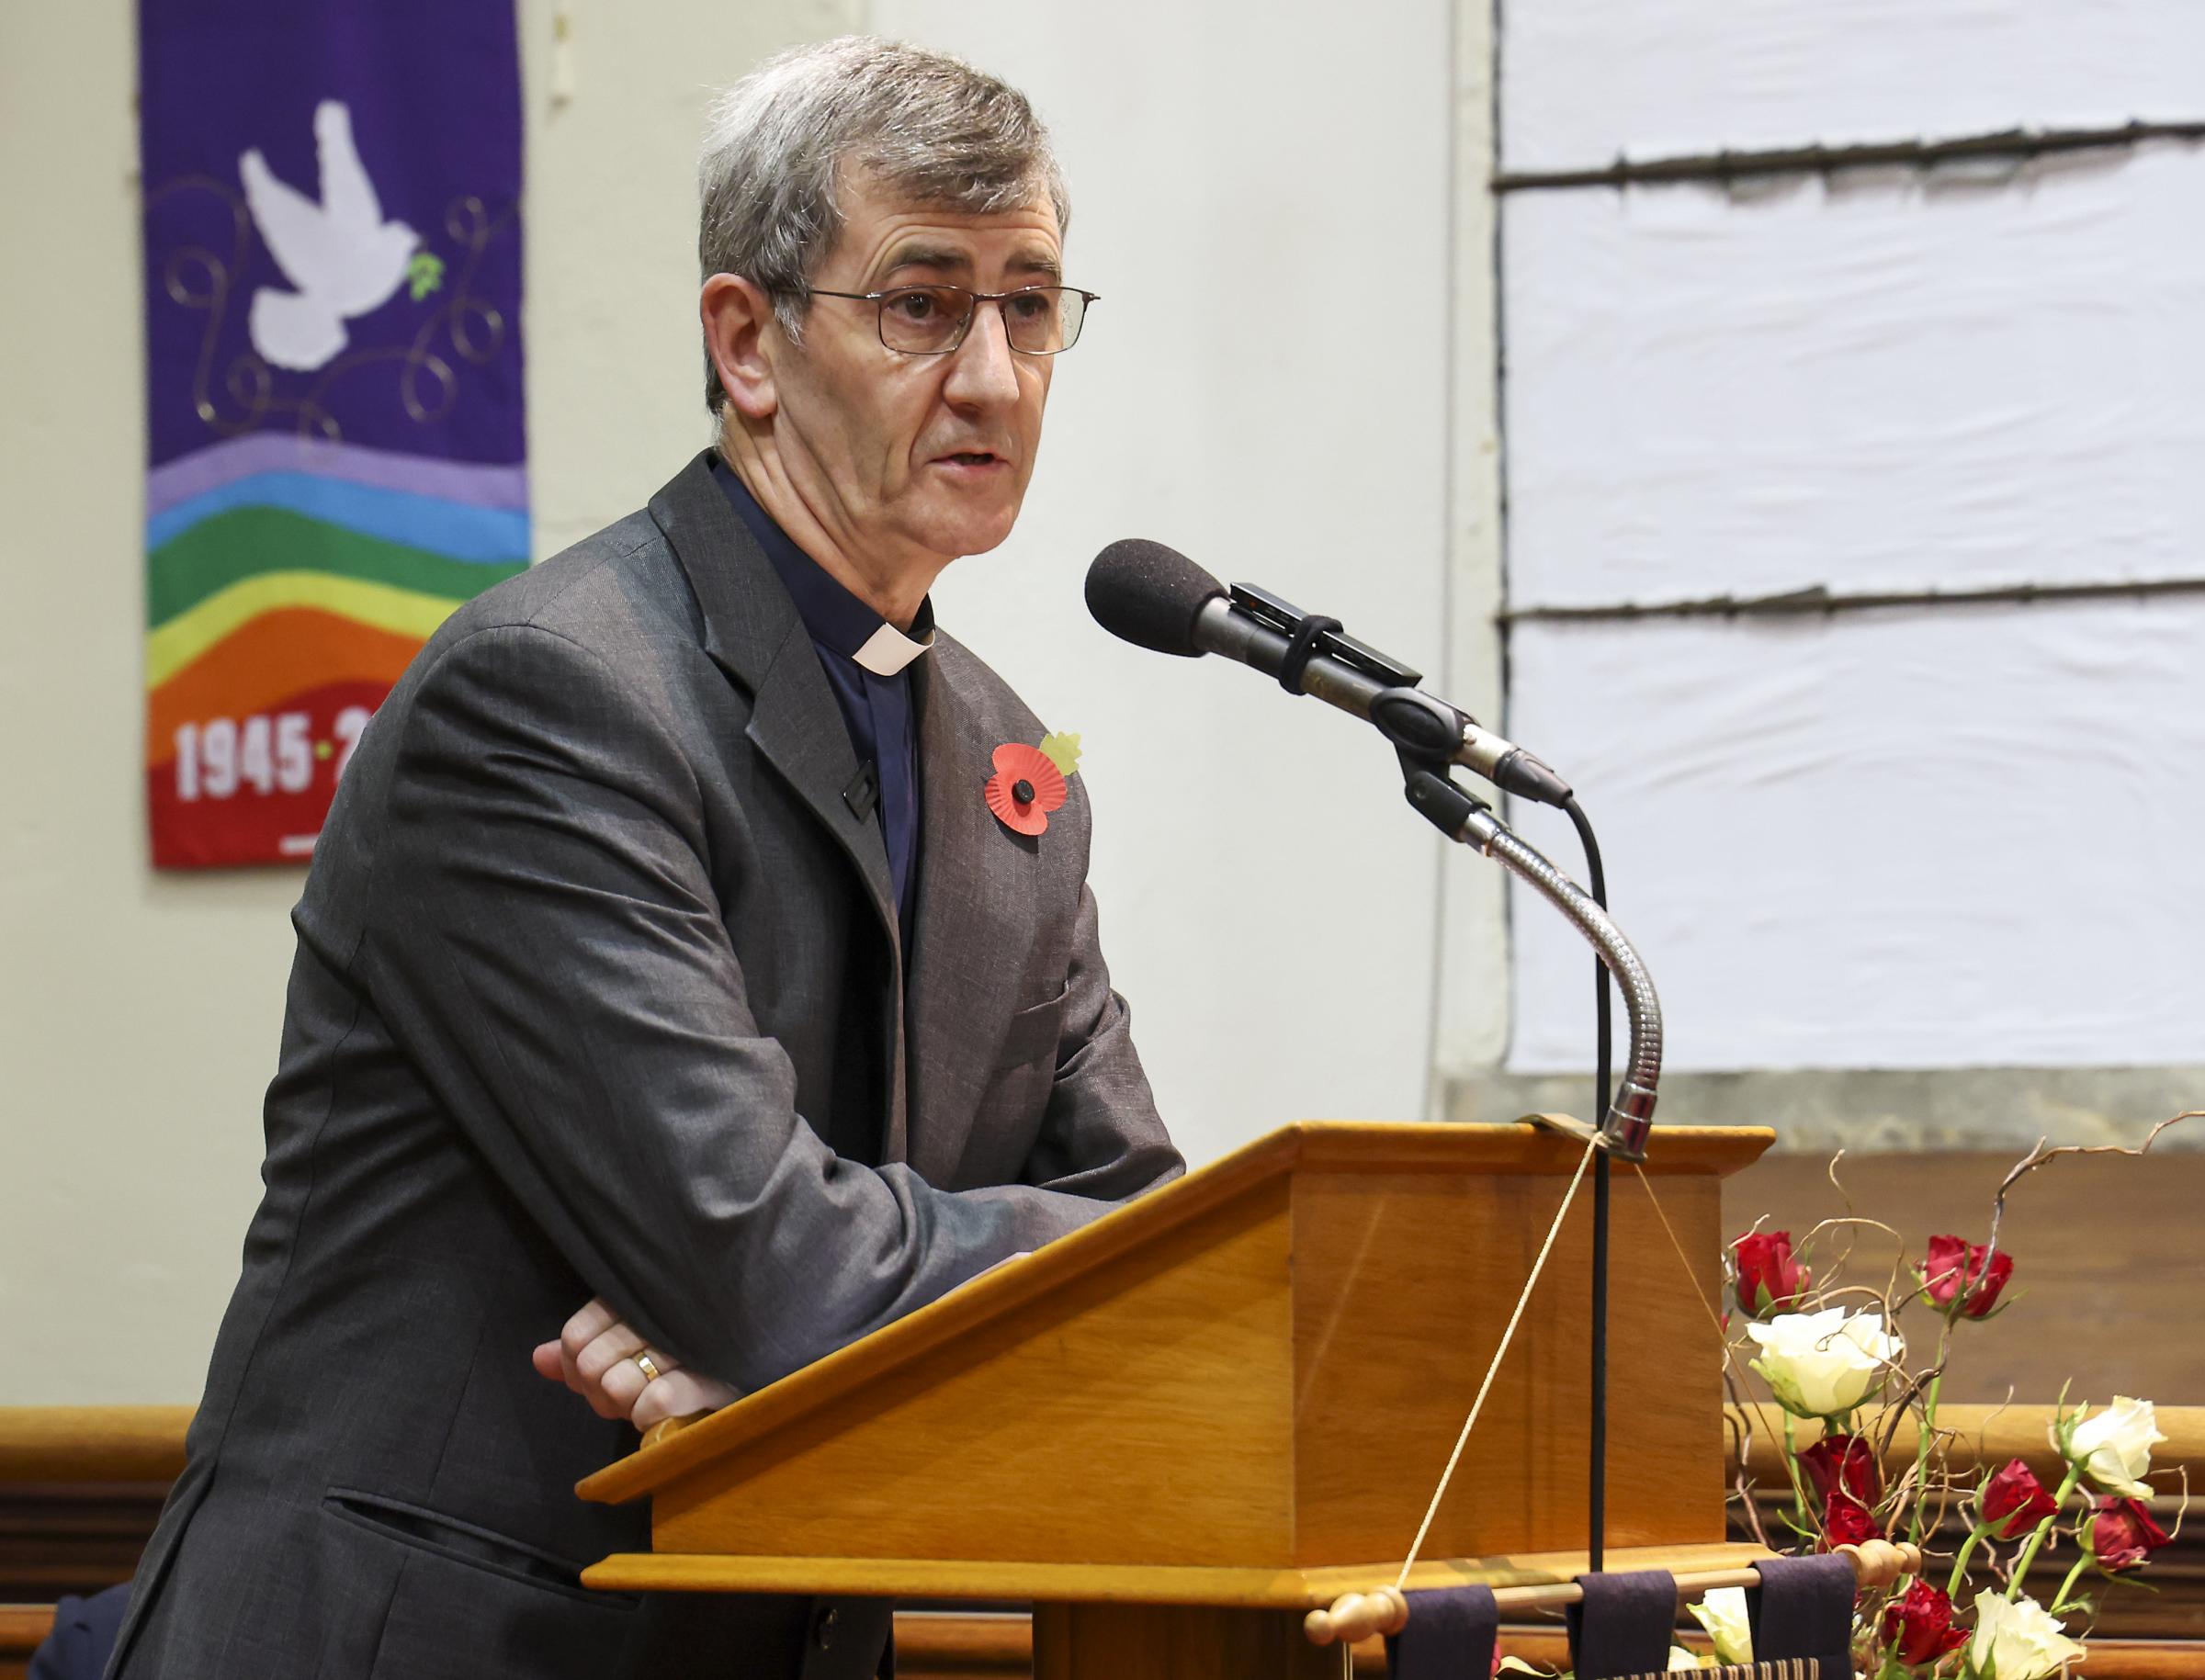 Rev David Cupples, minister of Enniskillen Presbyterian Church, speaking at The 35th Anniversary Service of The Enniskillen Bomb.